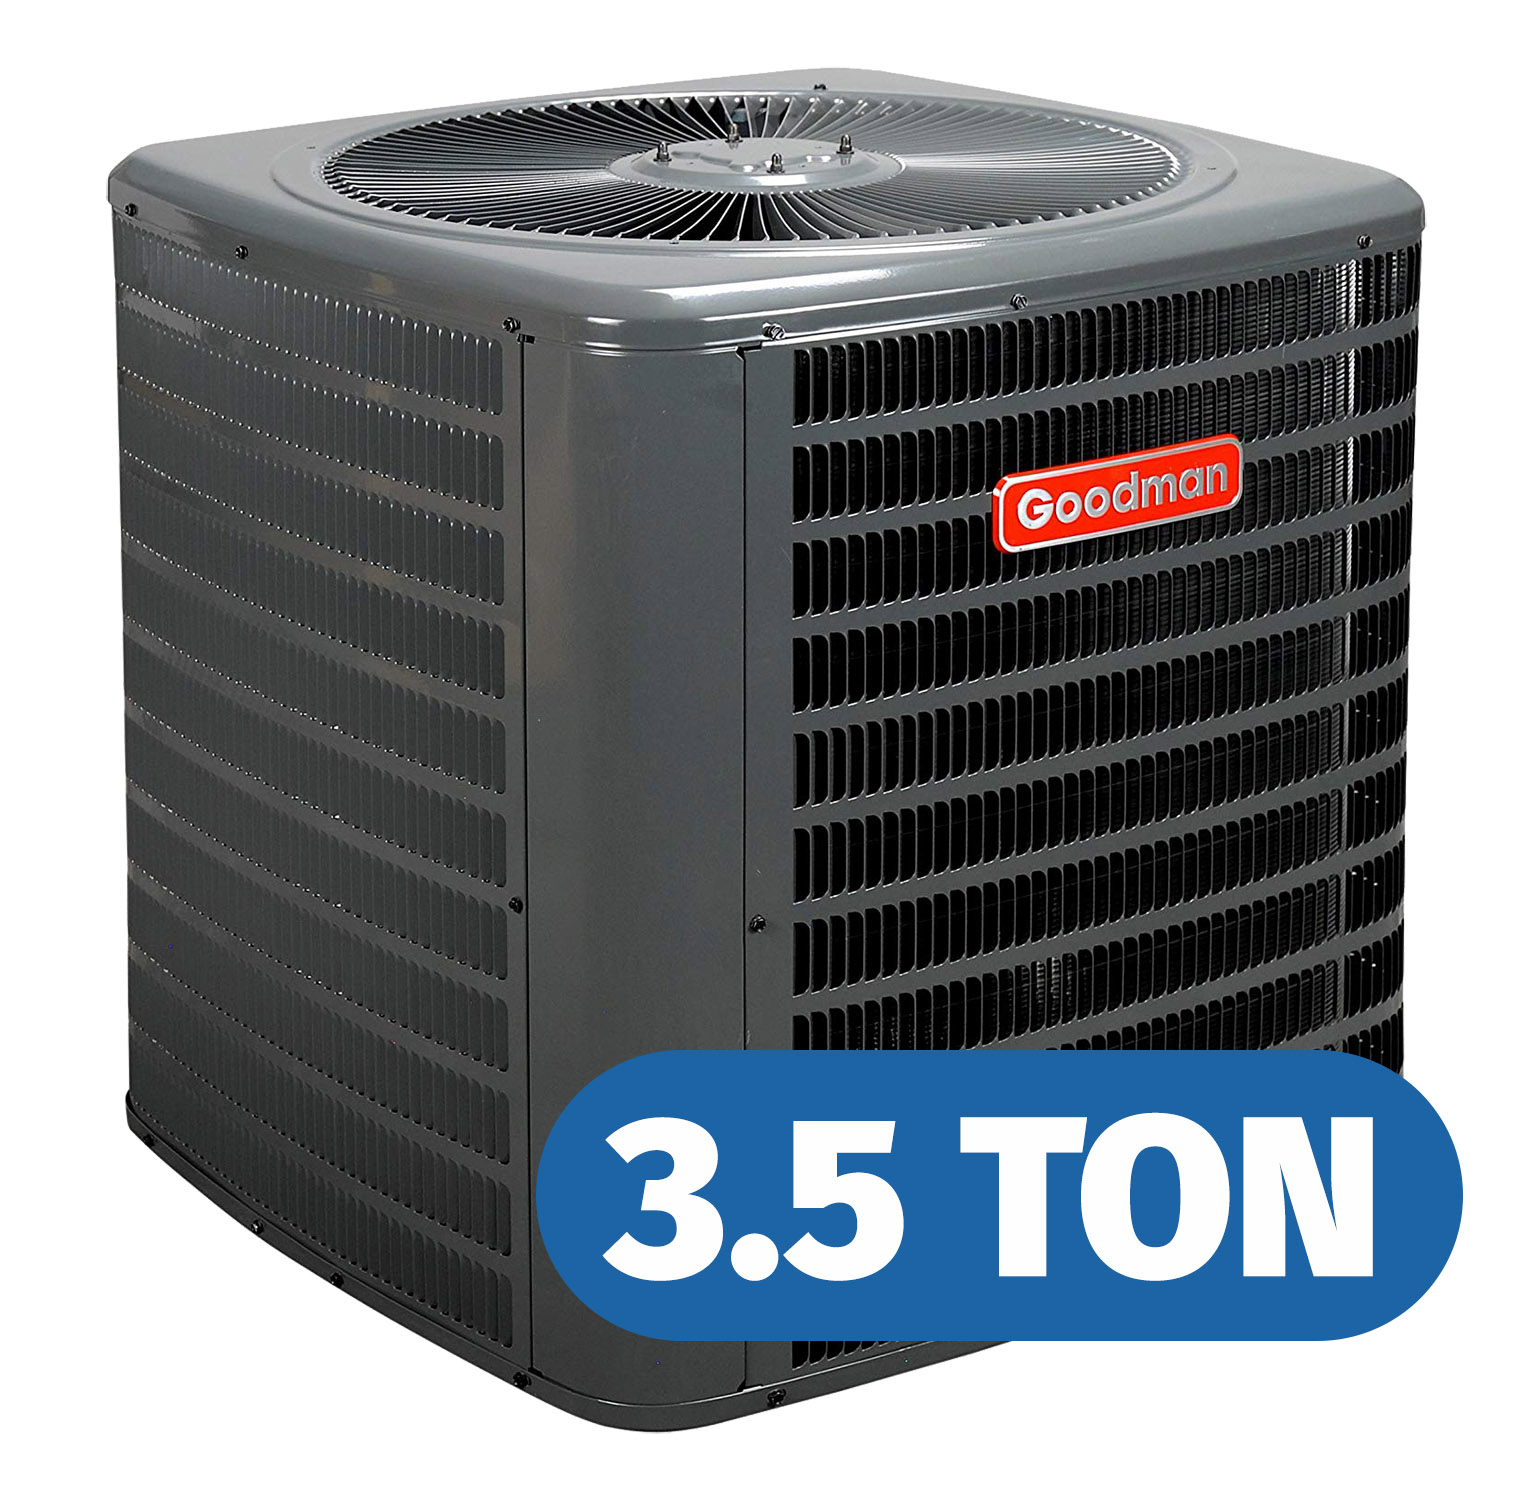 Goodman 3.5 Ton Air Conditioners 